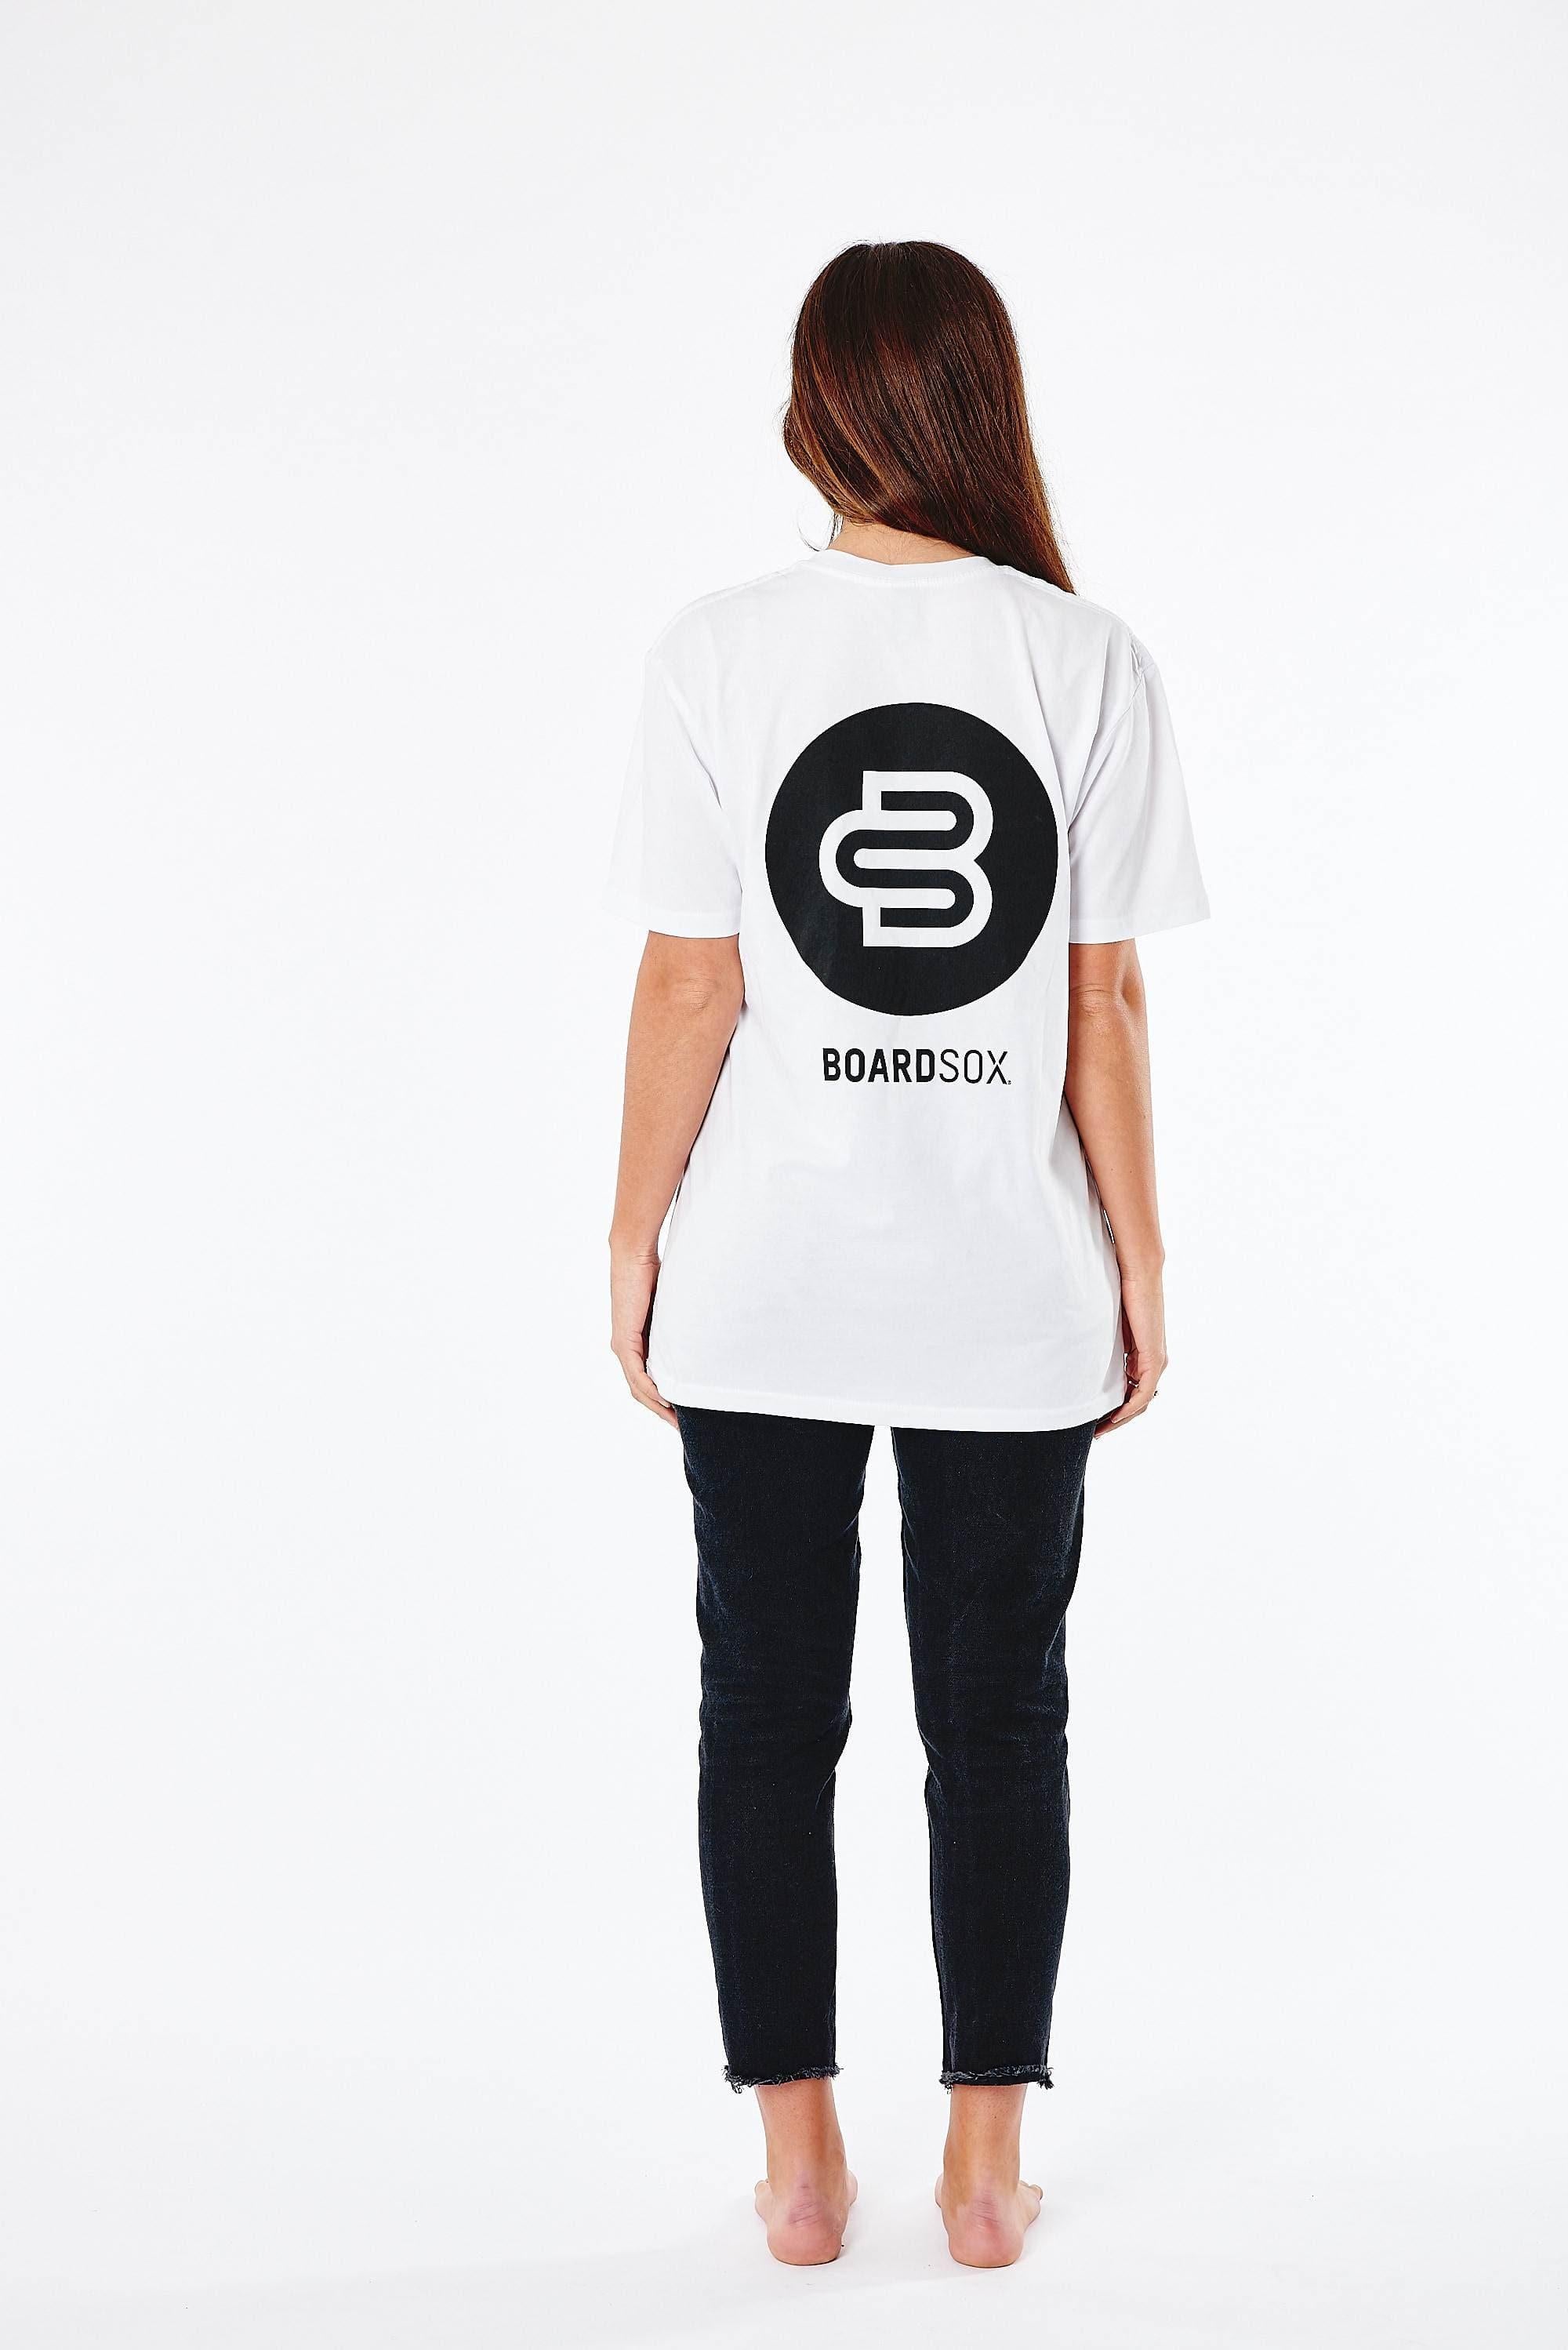 Boardsox® Womens White T-Shirt - BOARDSOX® AustraliaT-Shirt